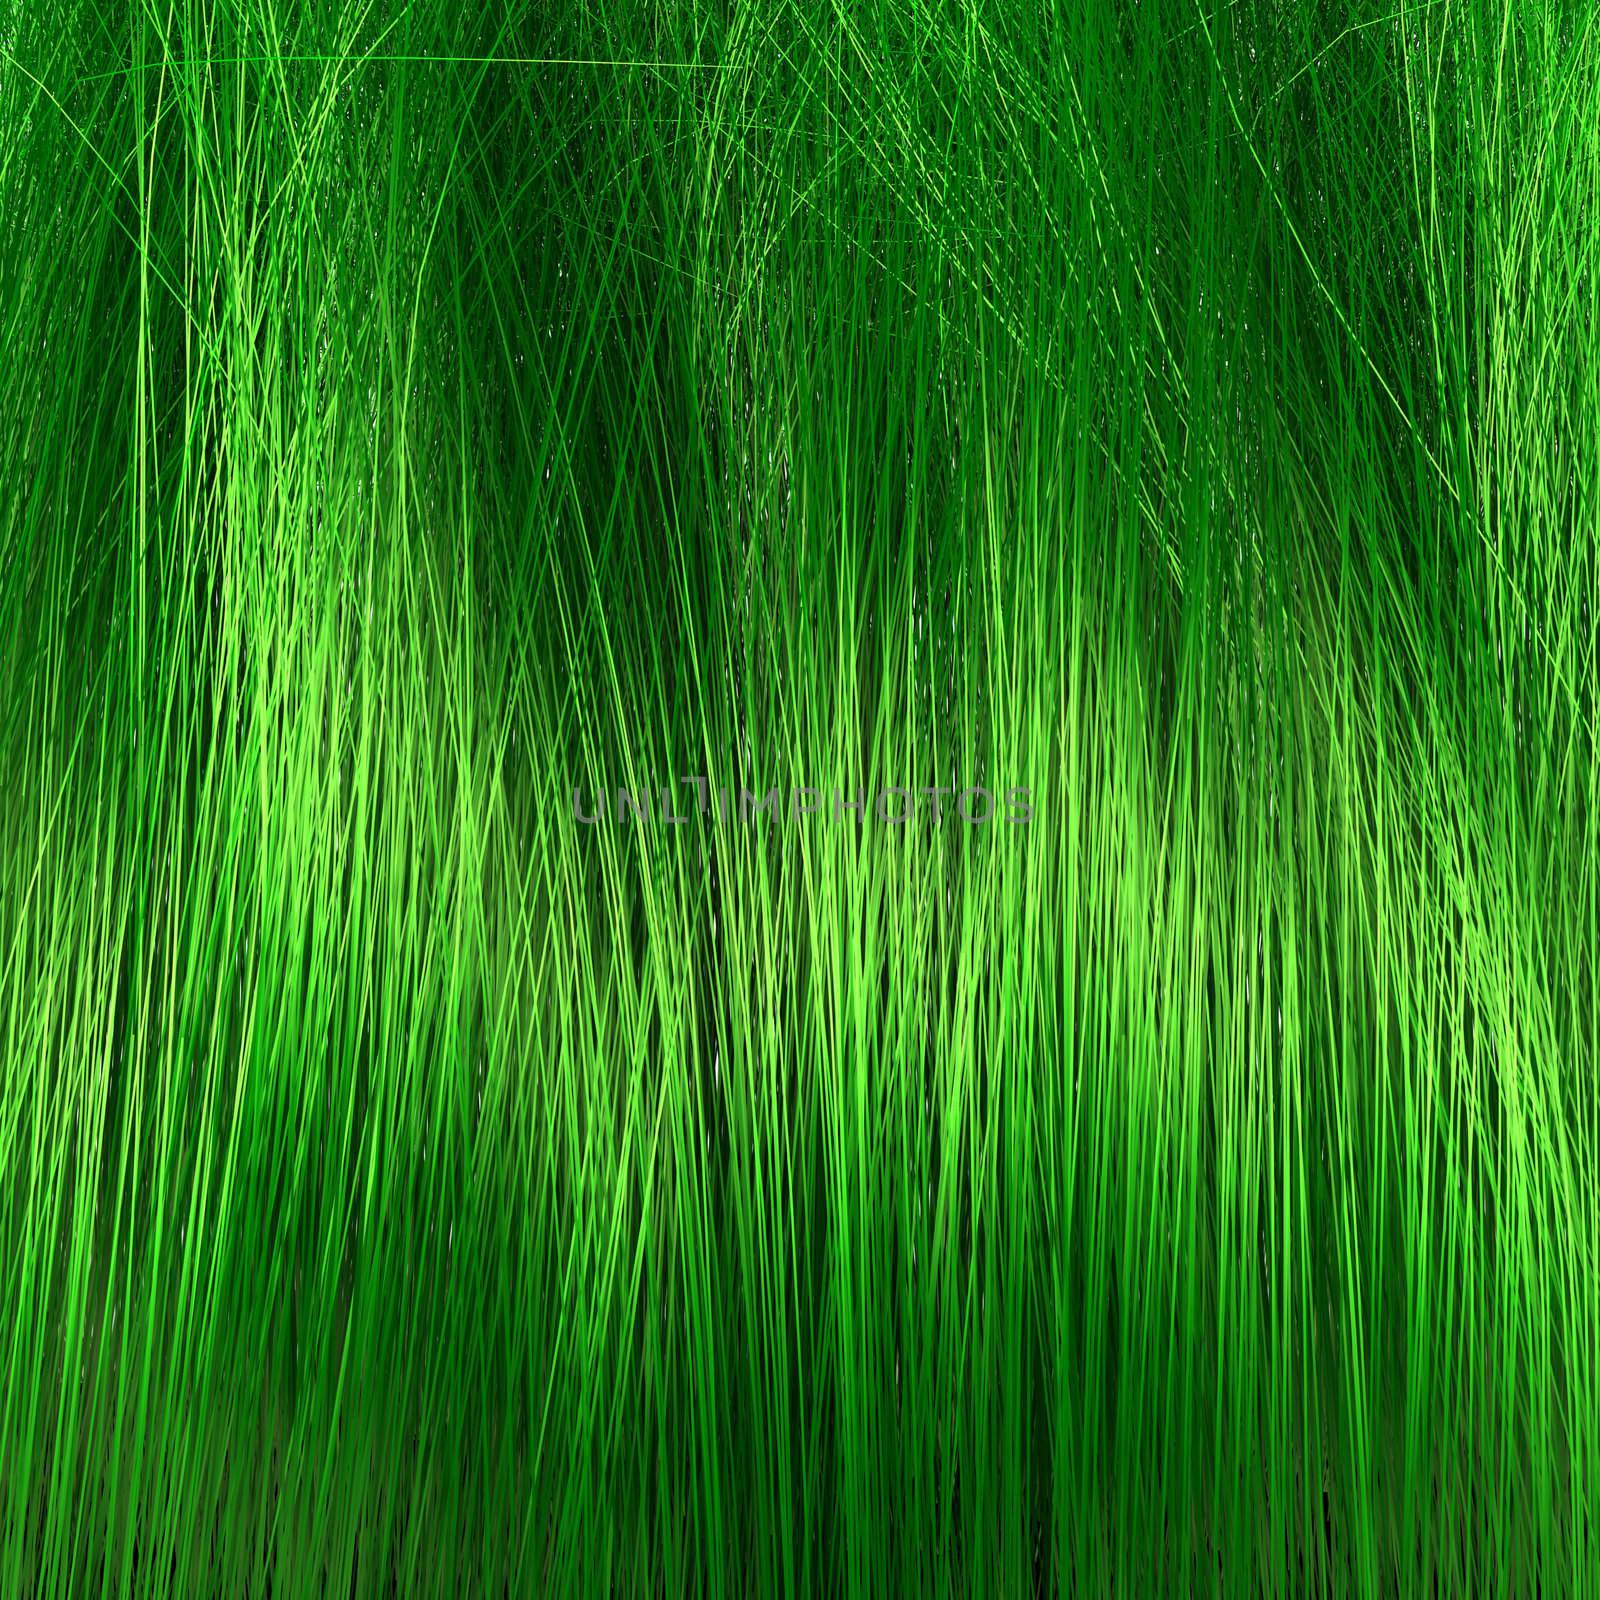 Grass or hair by carloscastilla